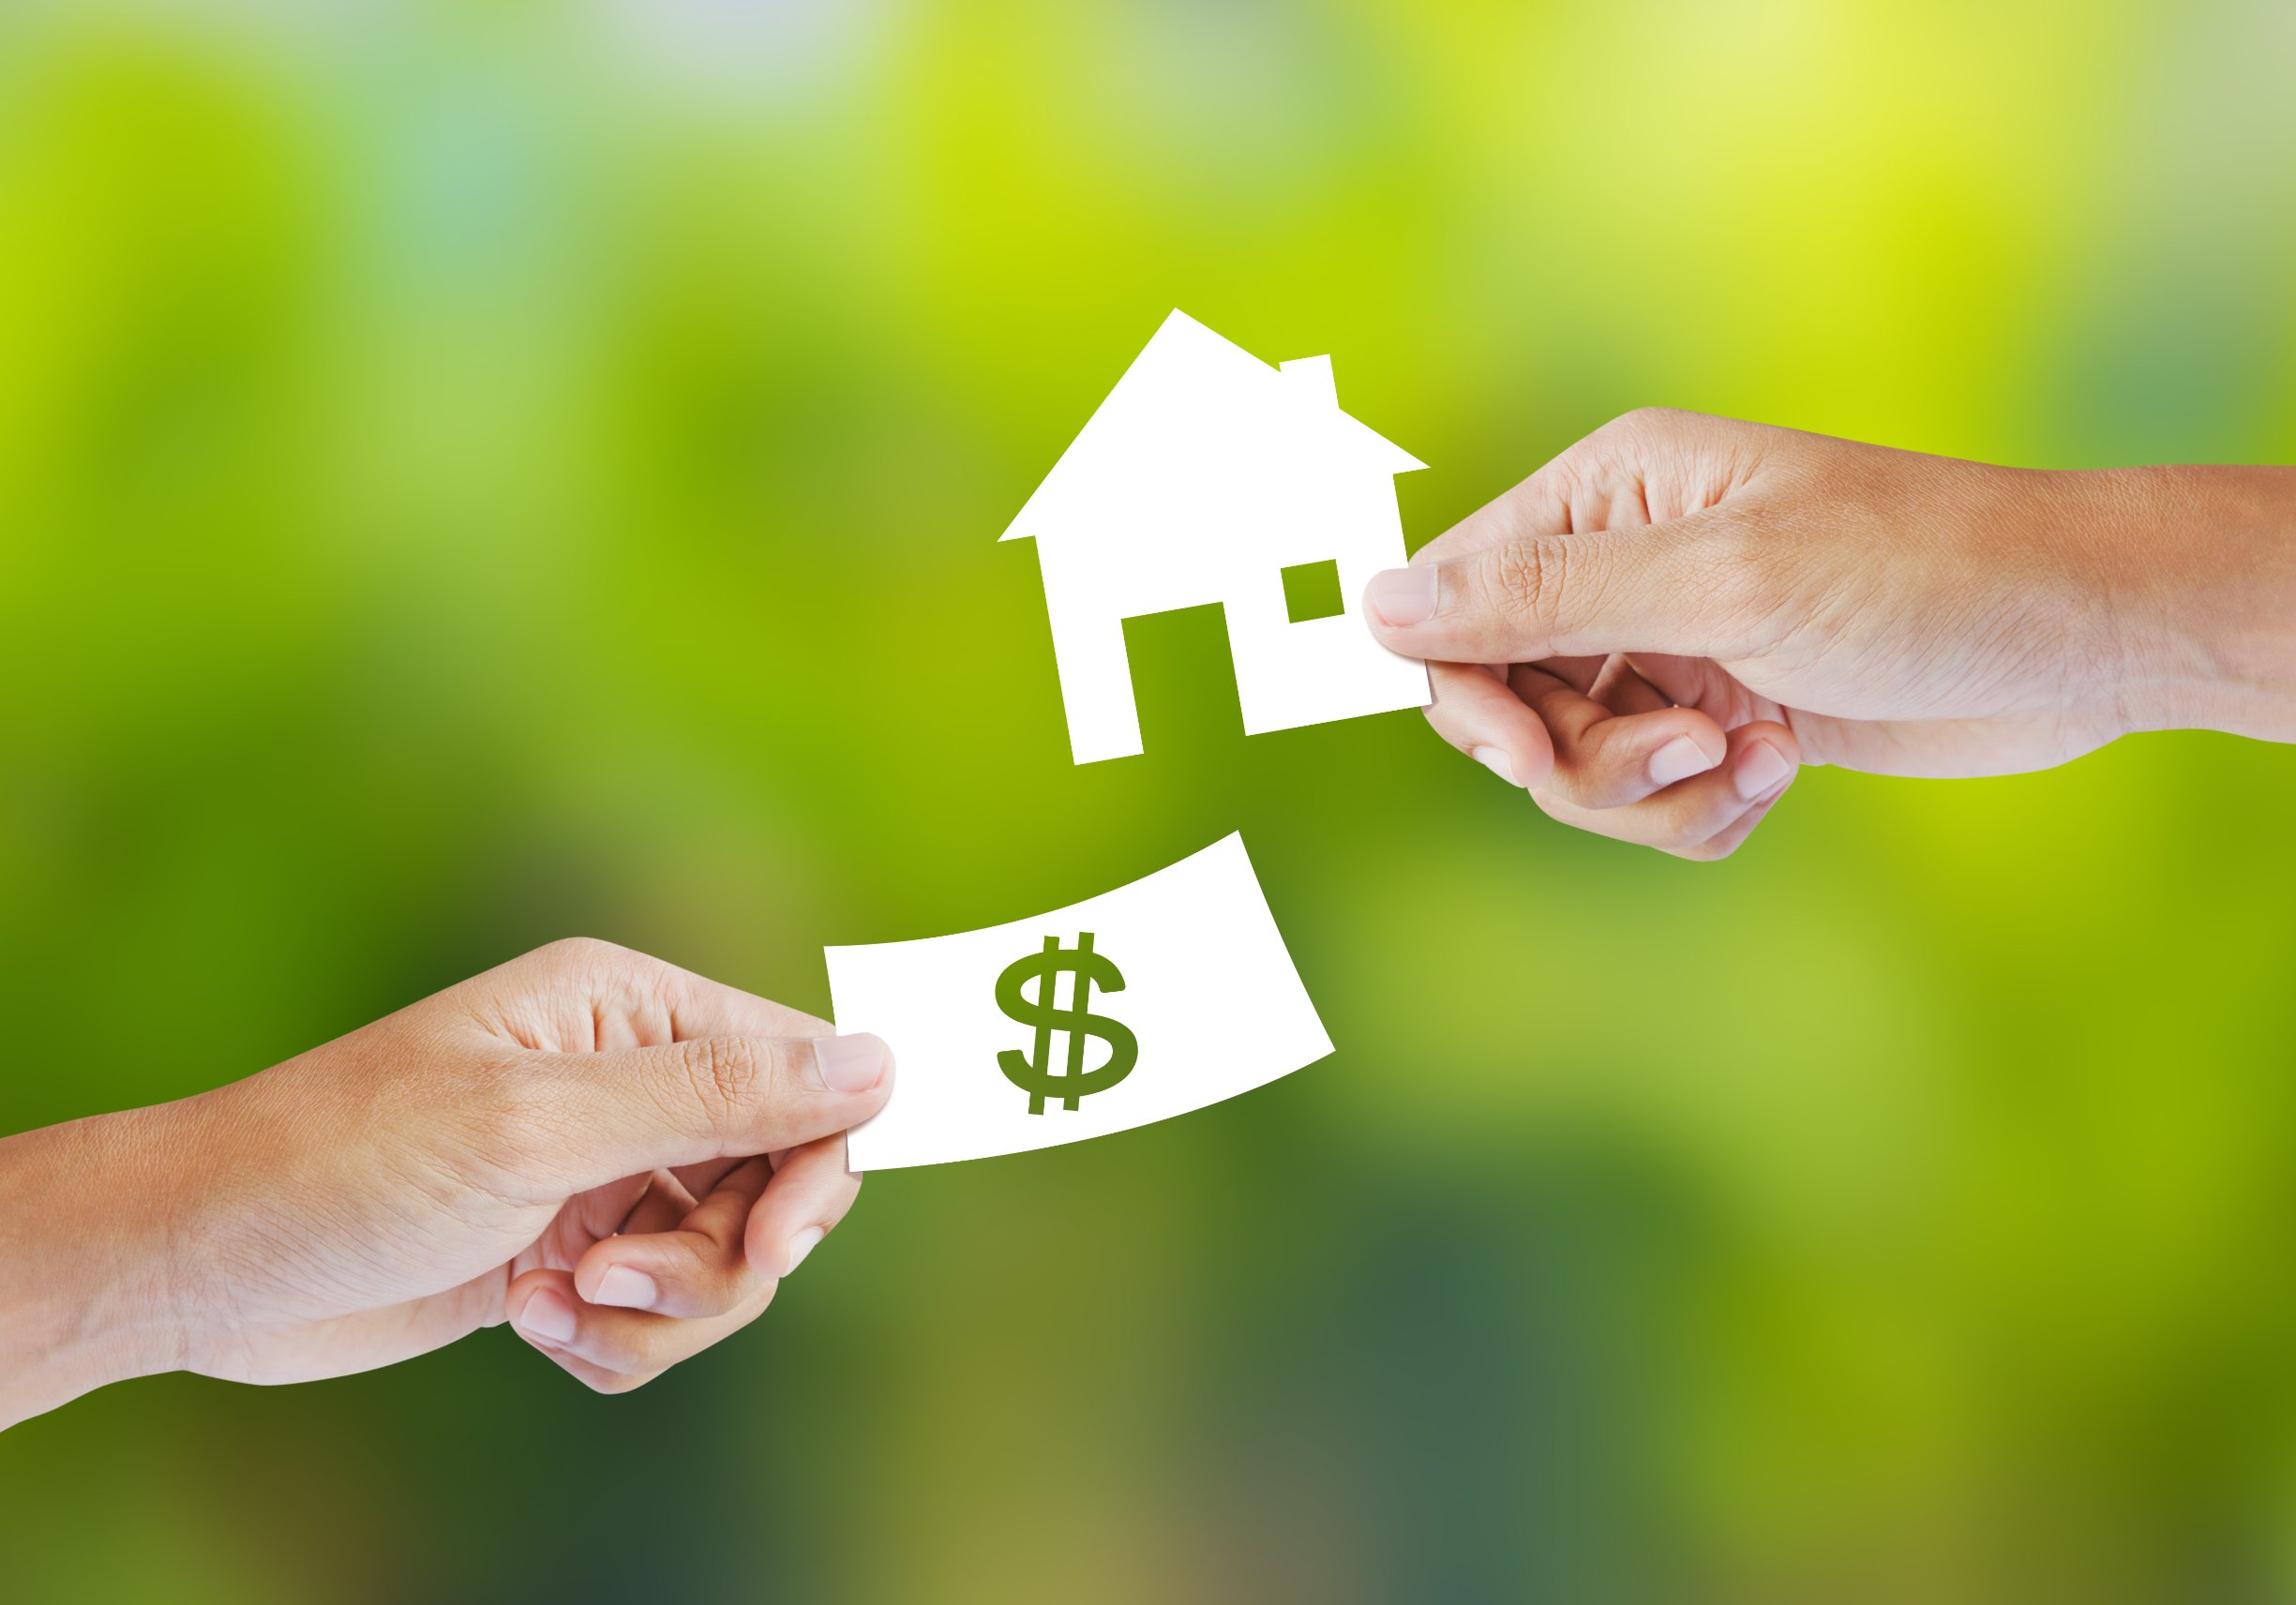 Digital Real Estate: Maximize Your House Sale Potential Online